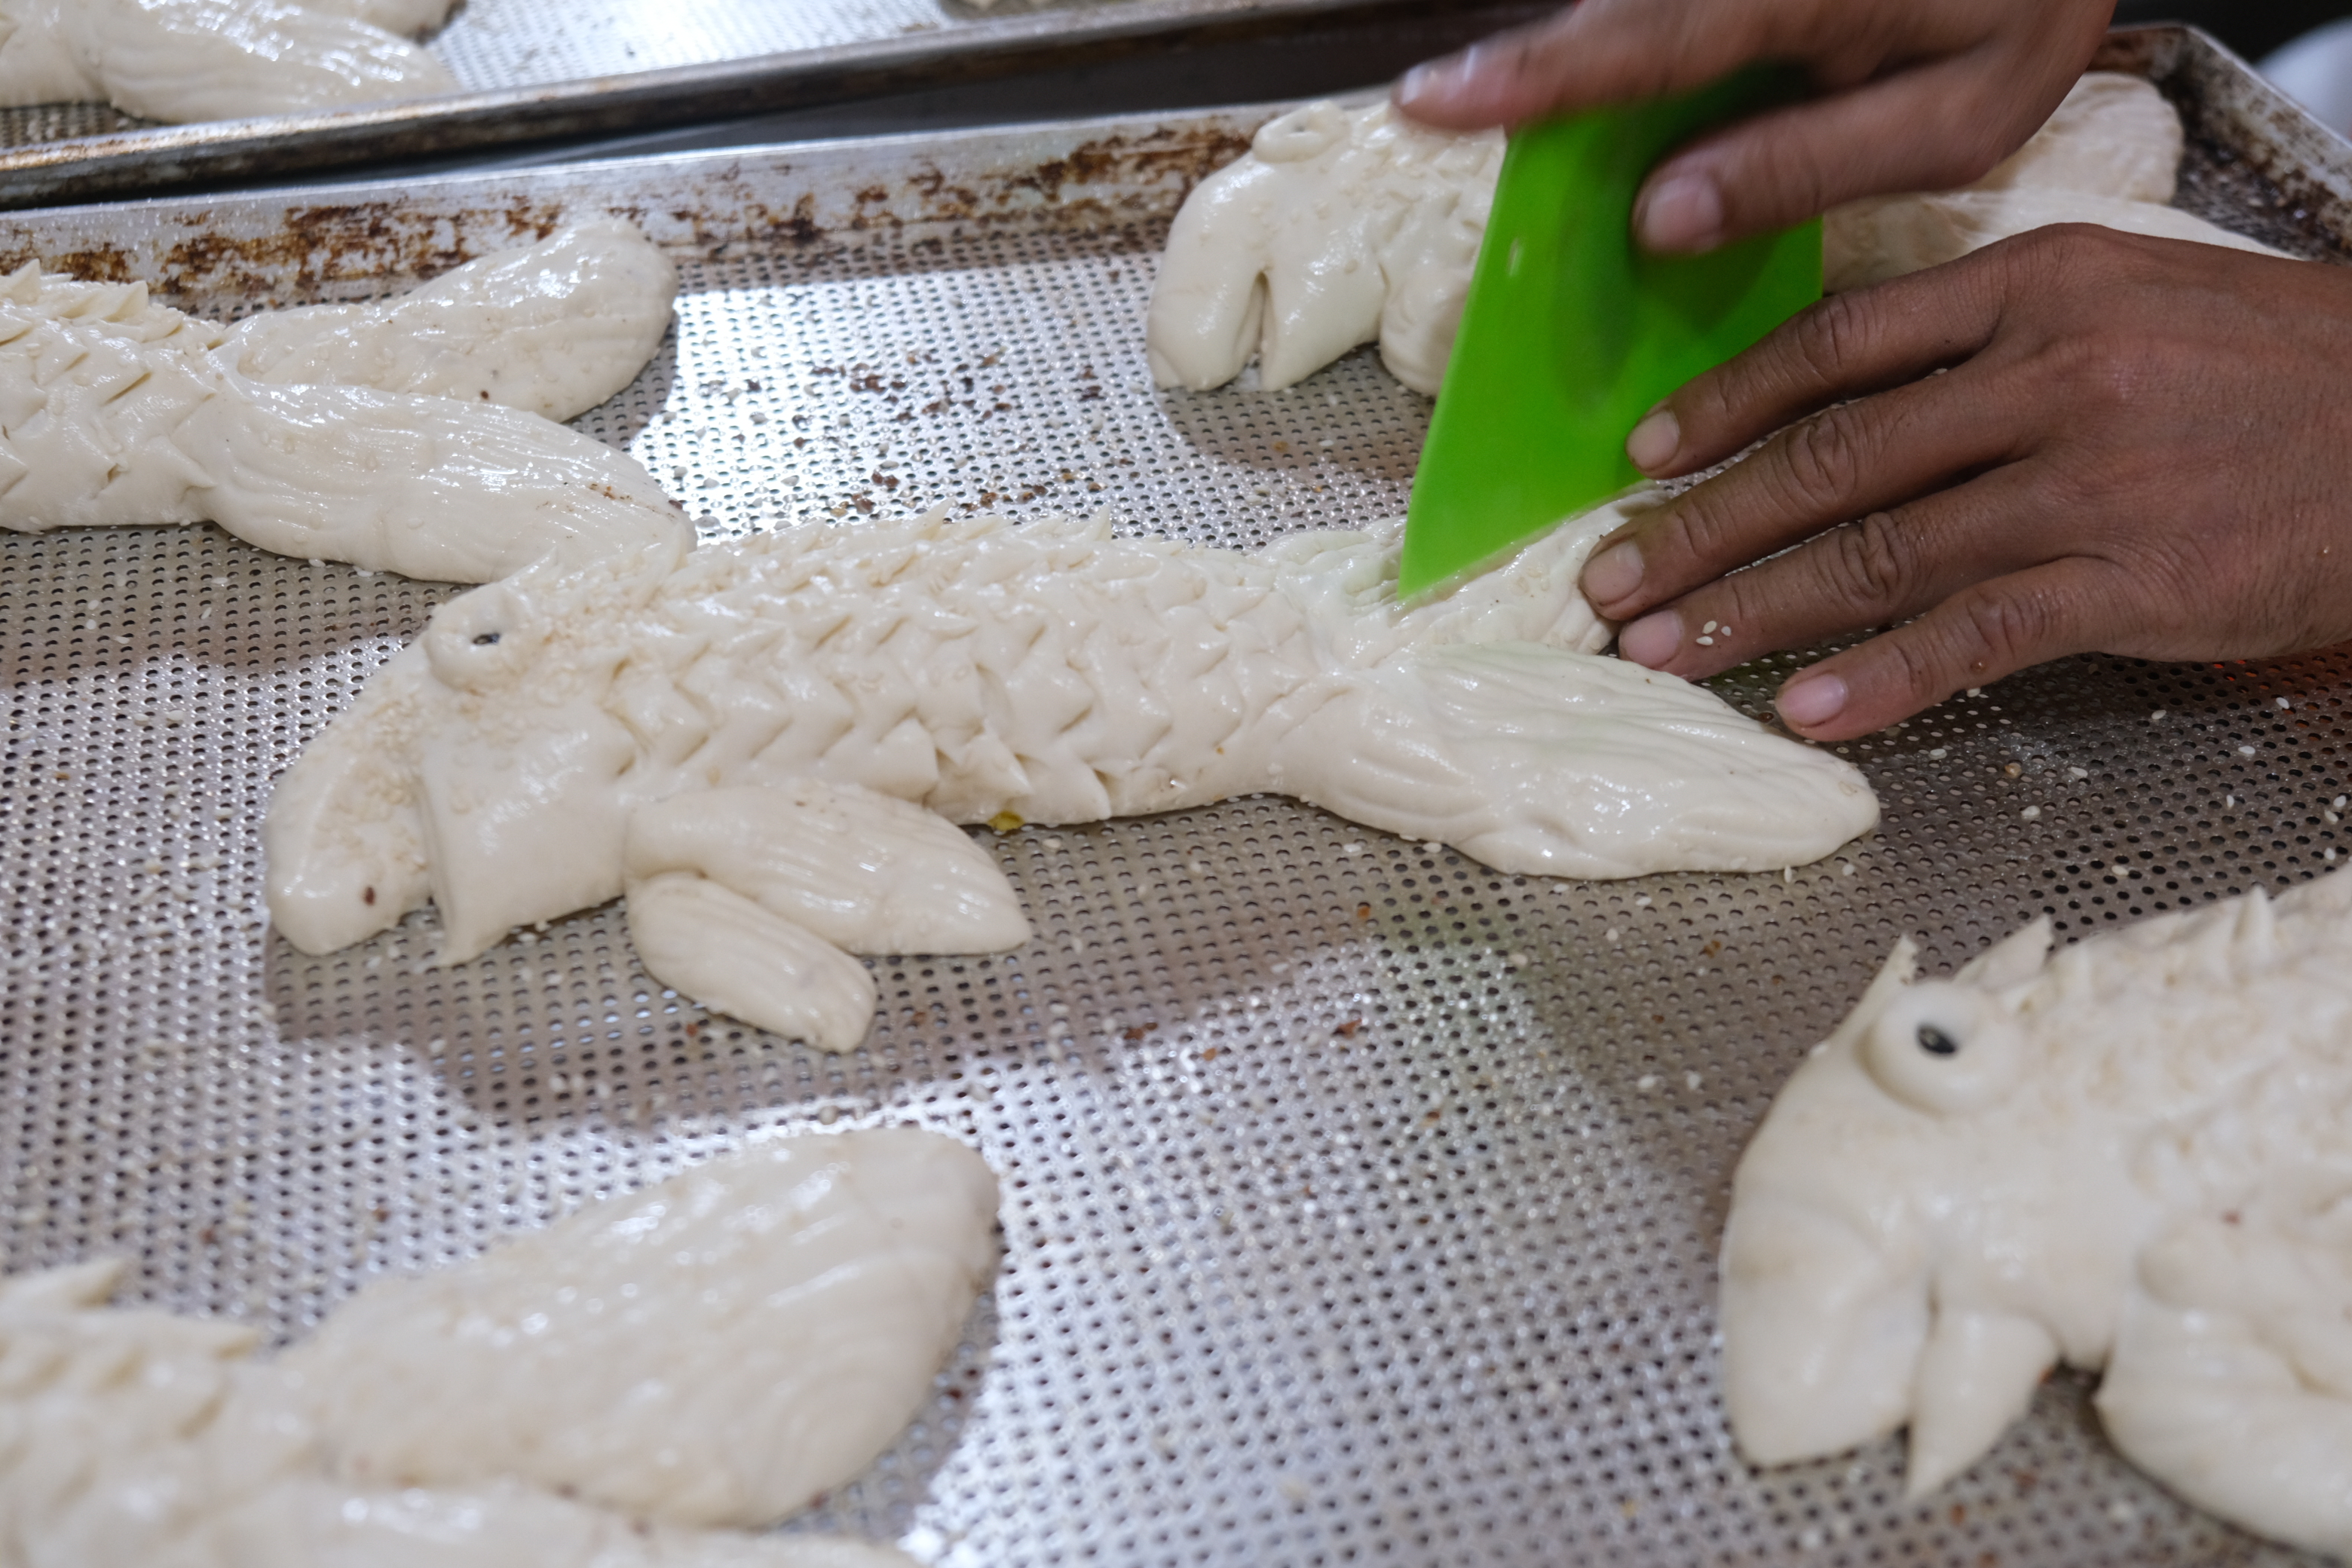 A staff members shapes bread into fish at 7.7 Bakery. Photo: Ngoc Phuong / Tuoi Tre News